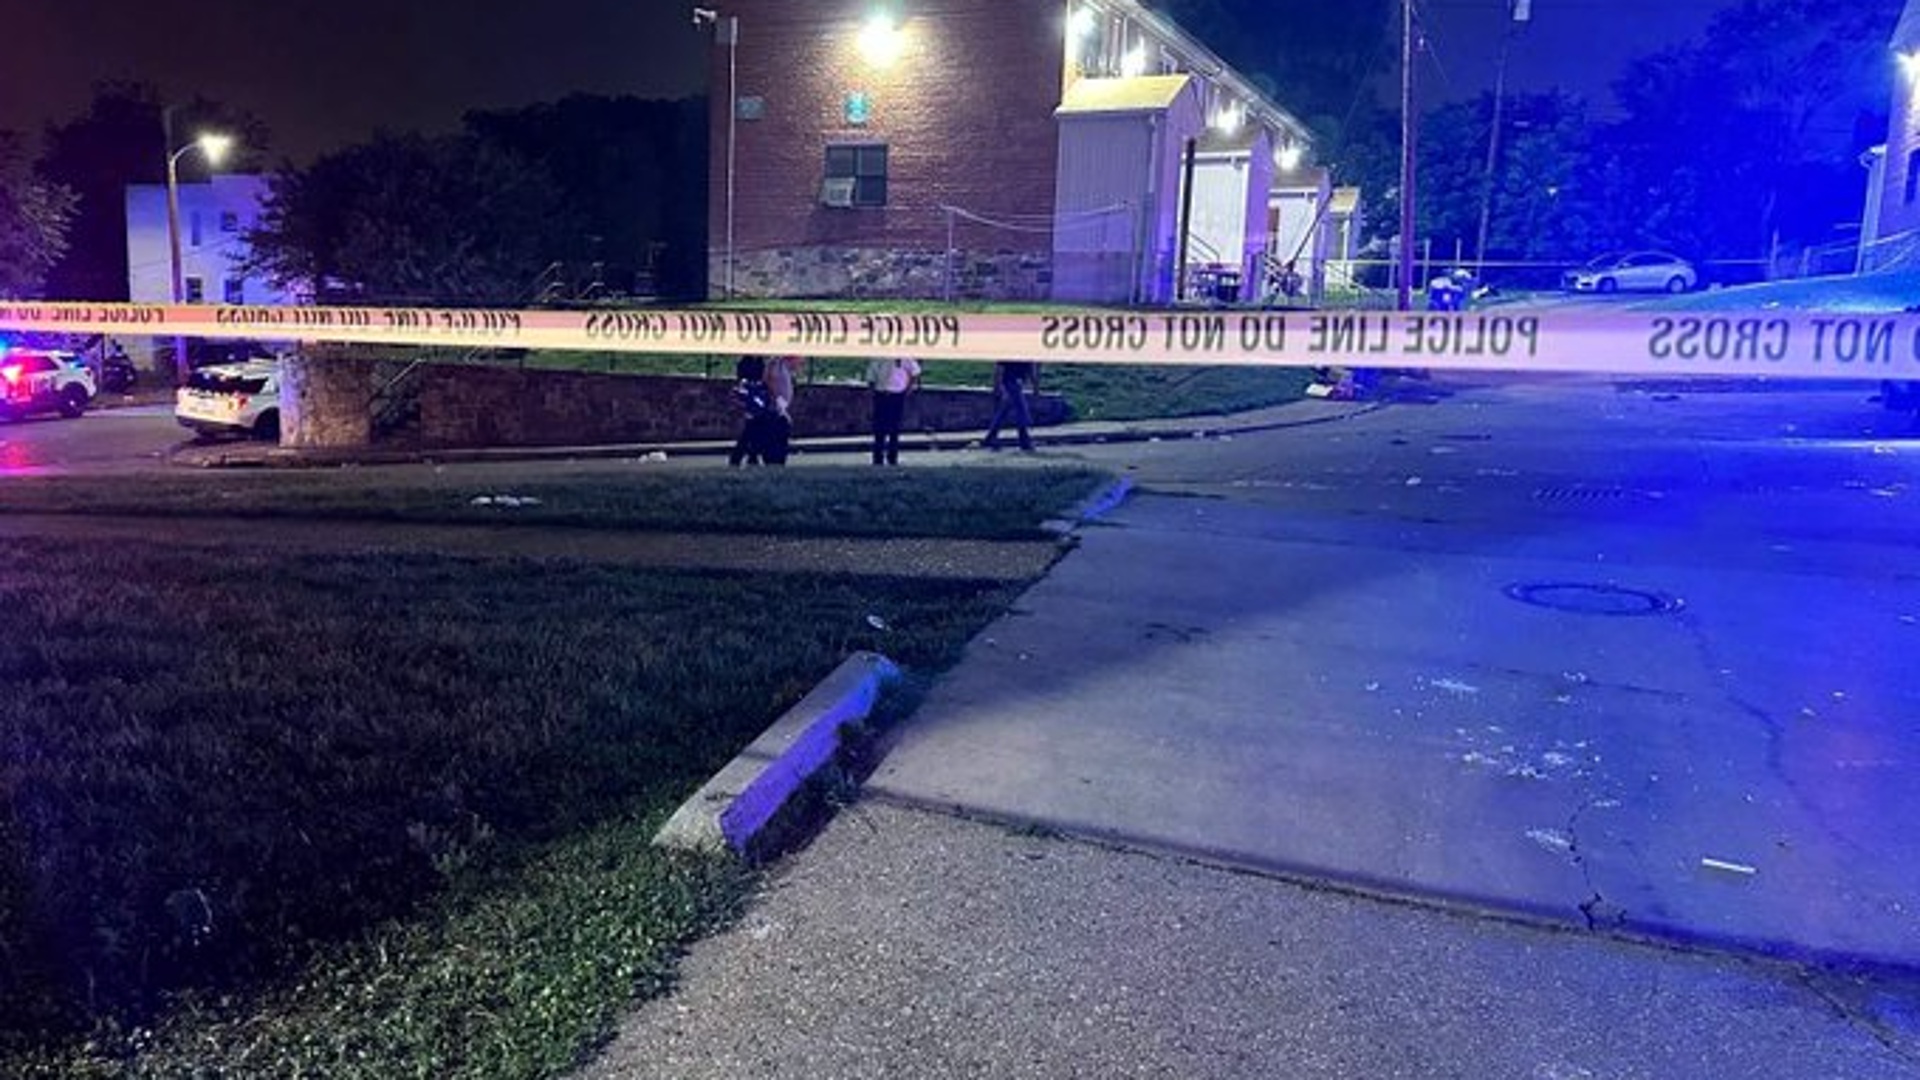 Трагедия в балтиморе сша. Полиция США. Baltimore Mass shooting leaves 2 Dead, 28 injured at Street Party.